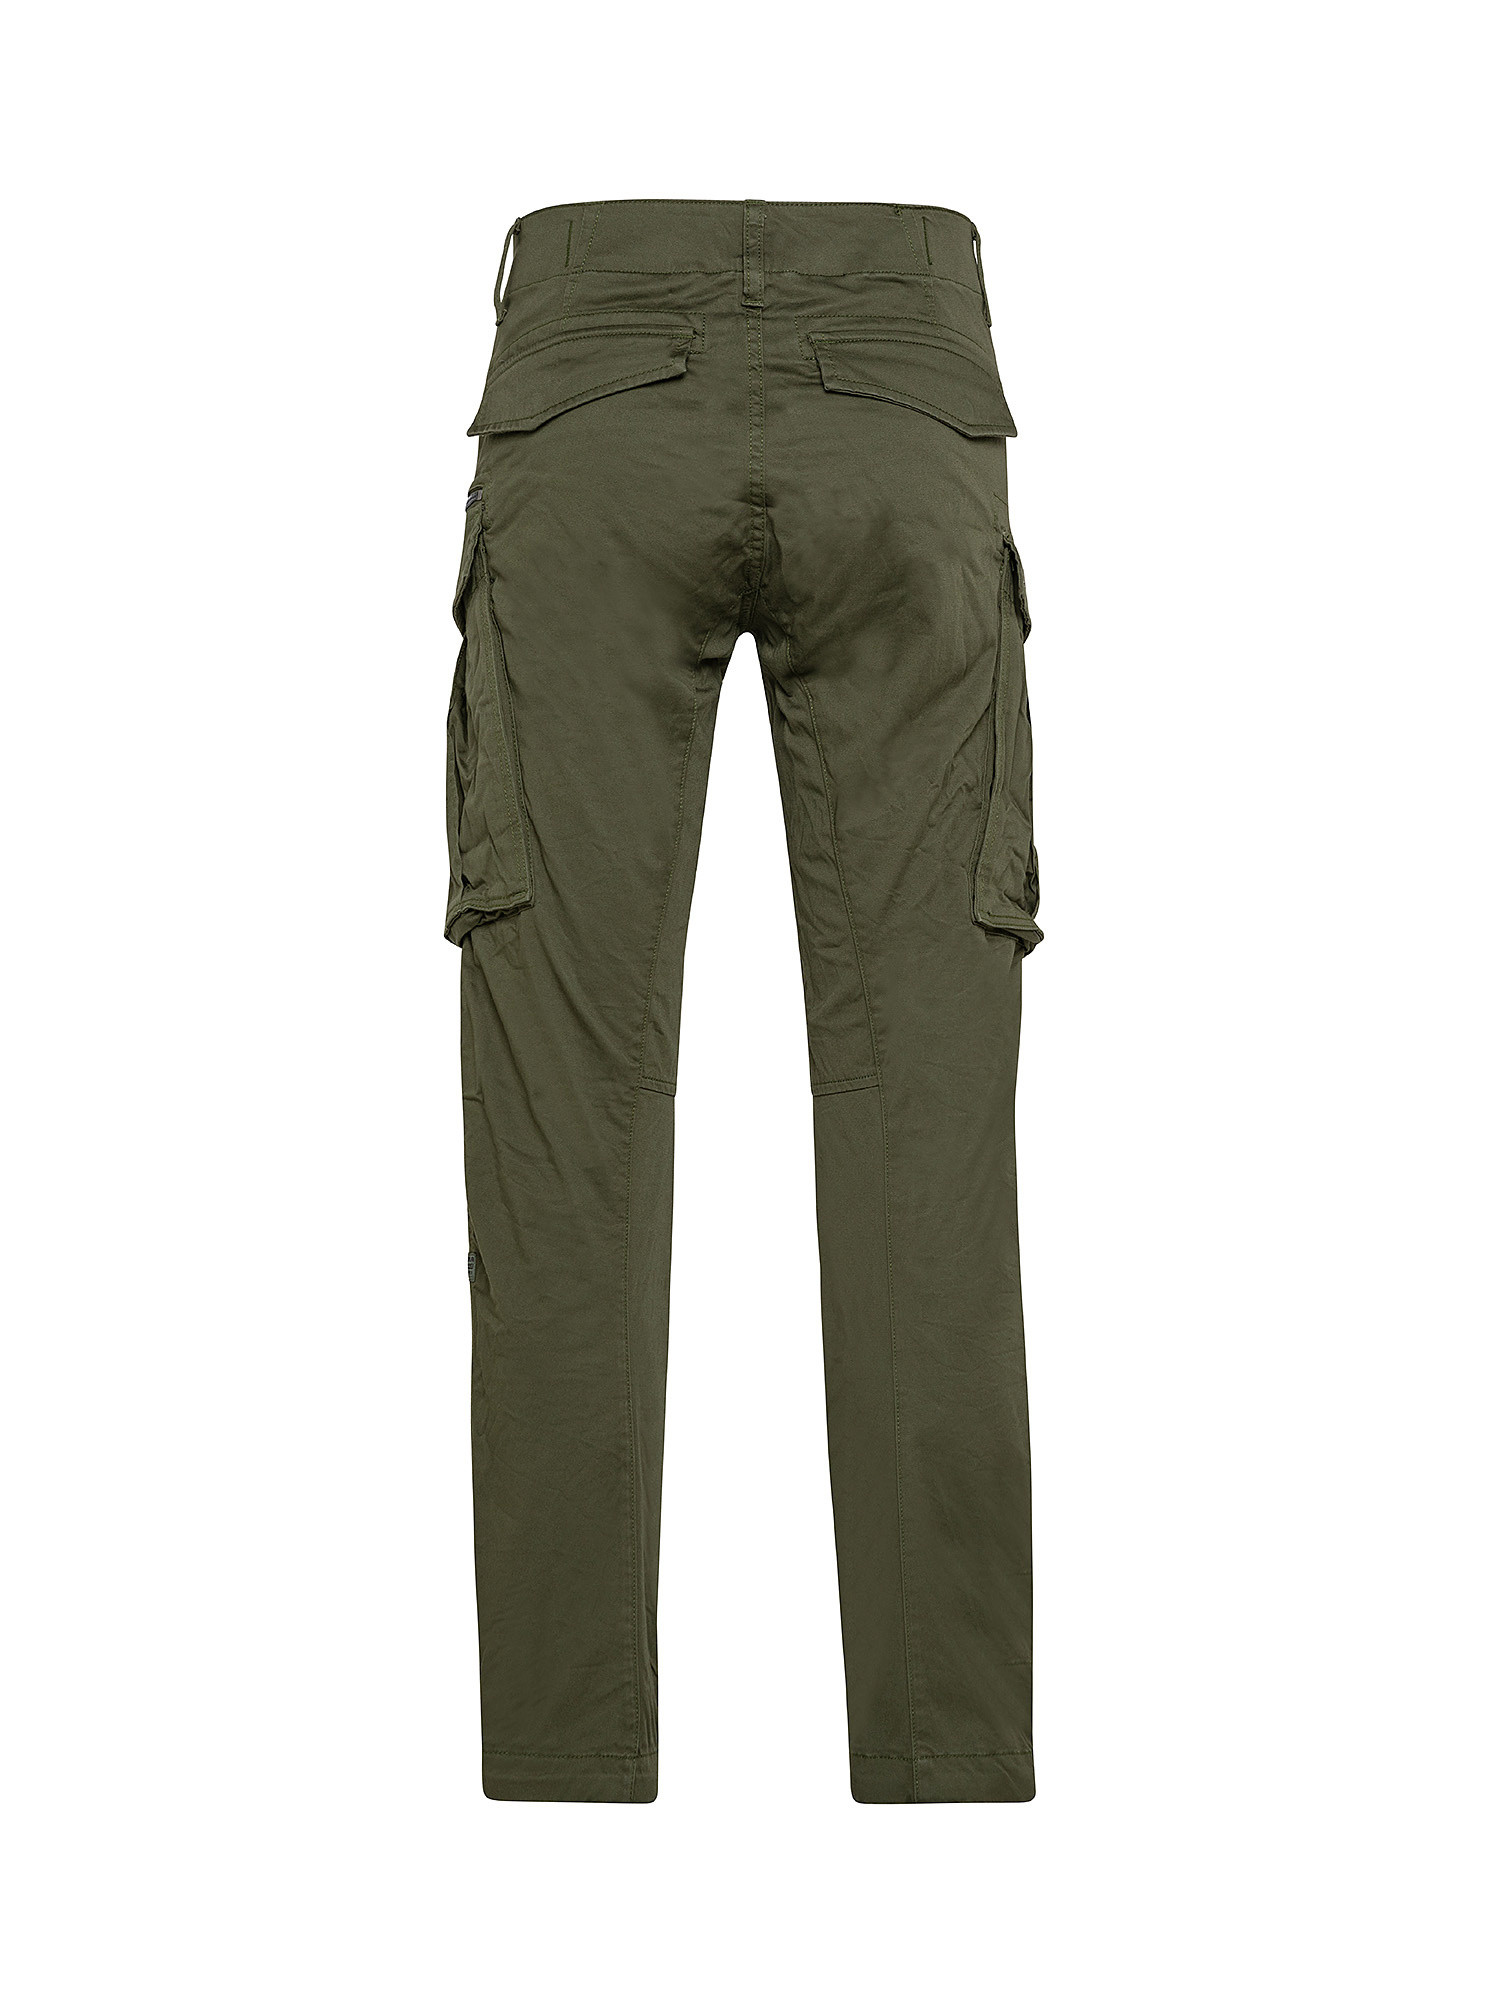 G-Star Cargo Pants, Olive Green, large image number 1